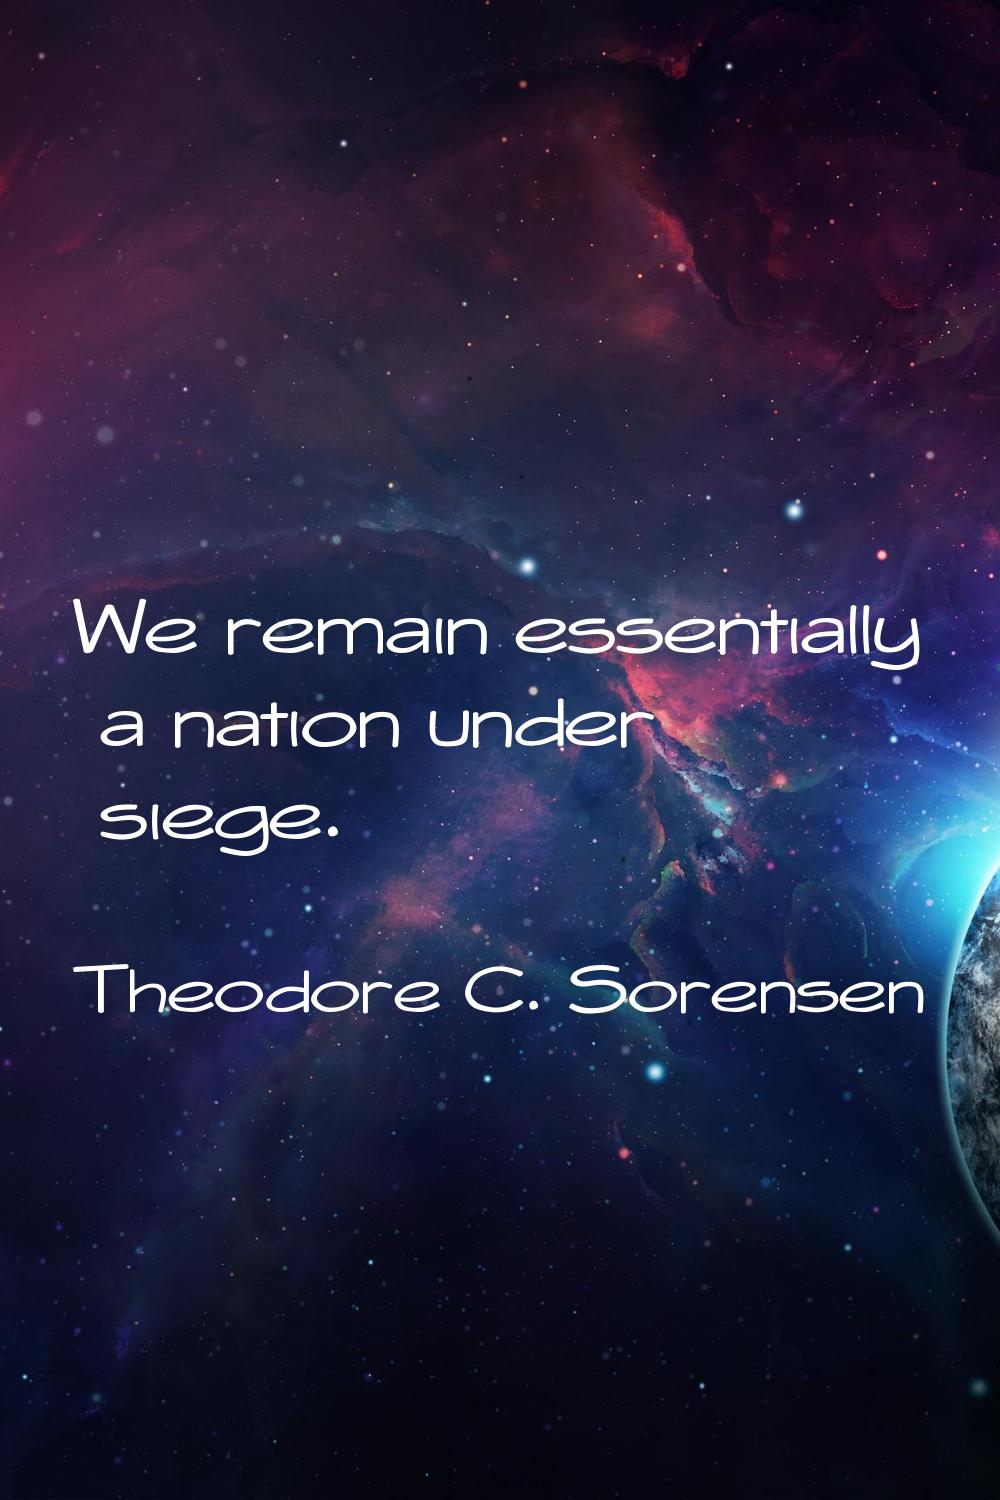 We remain essentially a nation under siege.